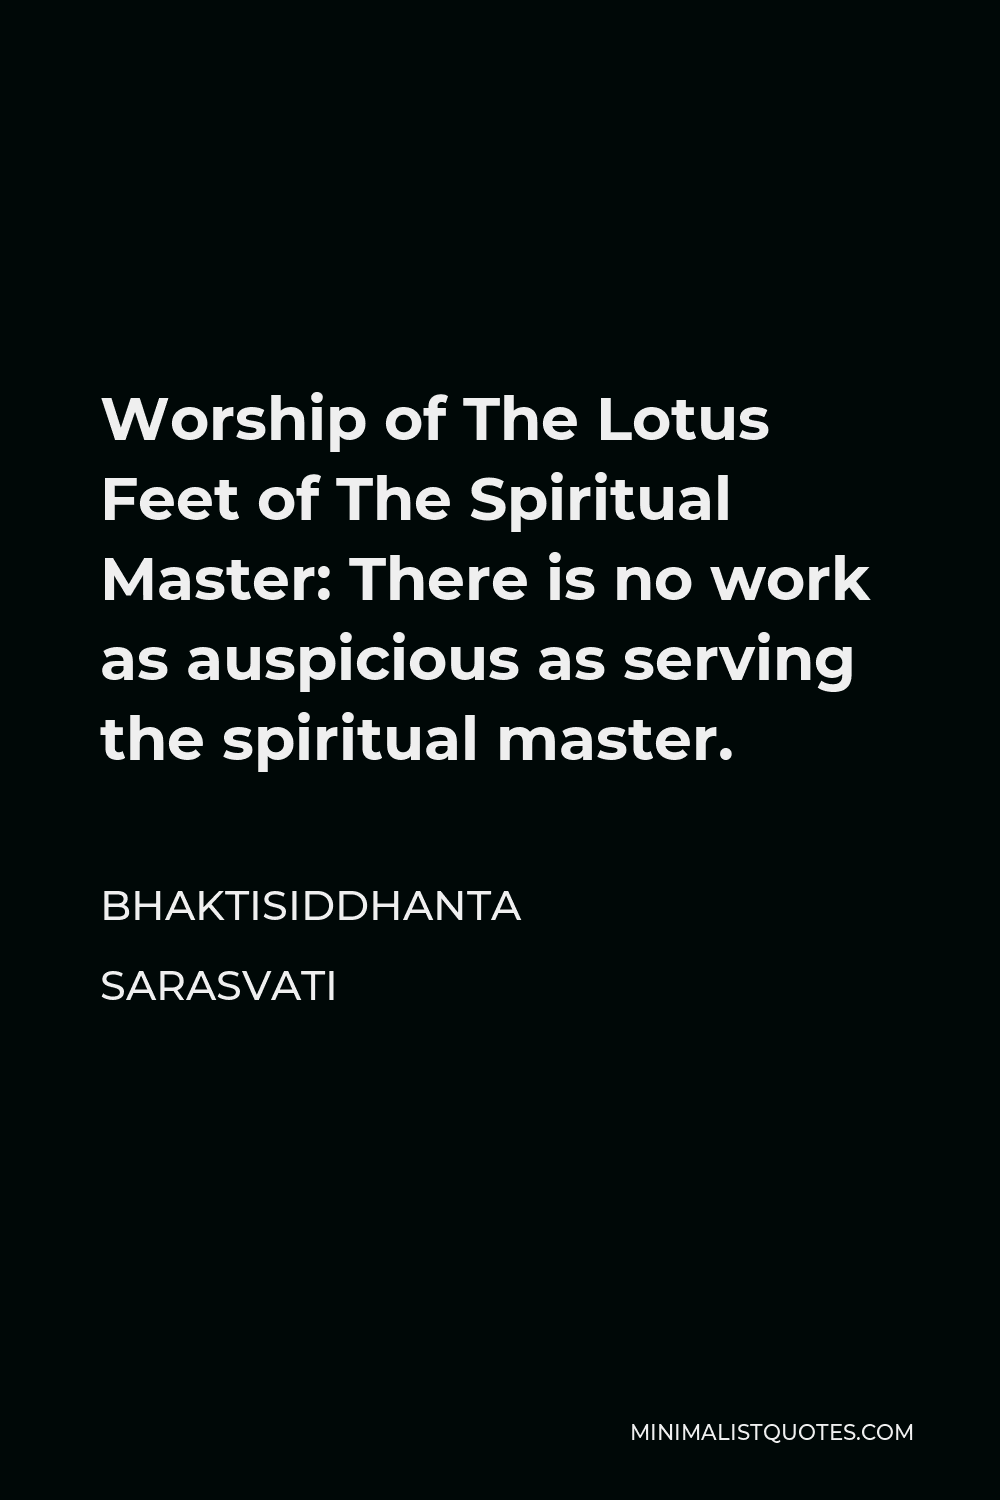 Bhaktisiddhanta Sarasvati Quote - Worship of The Lotus Feet of The Spiritual Master: There is no work as auspicious as serving the spiritual master.